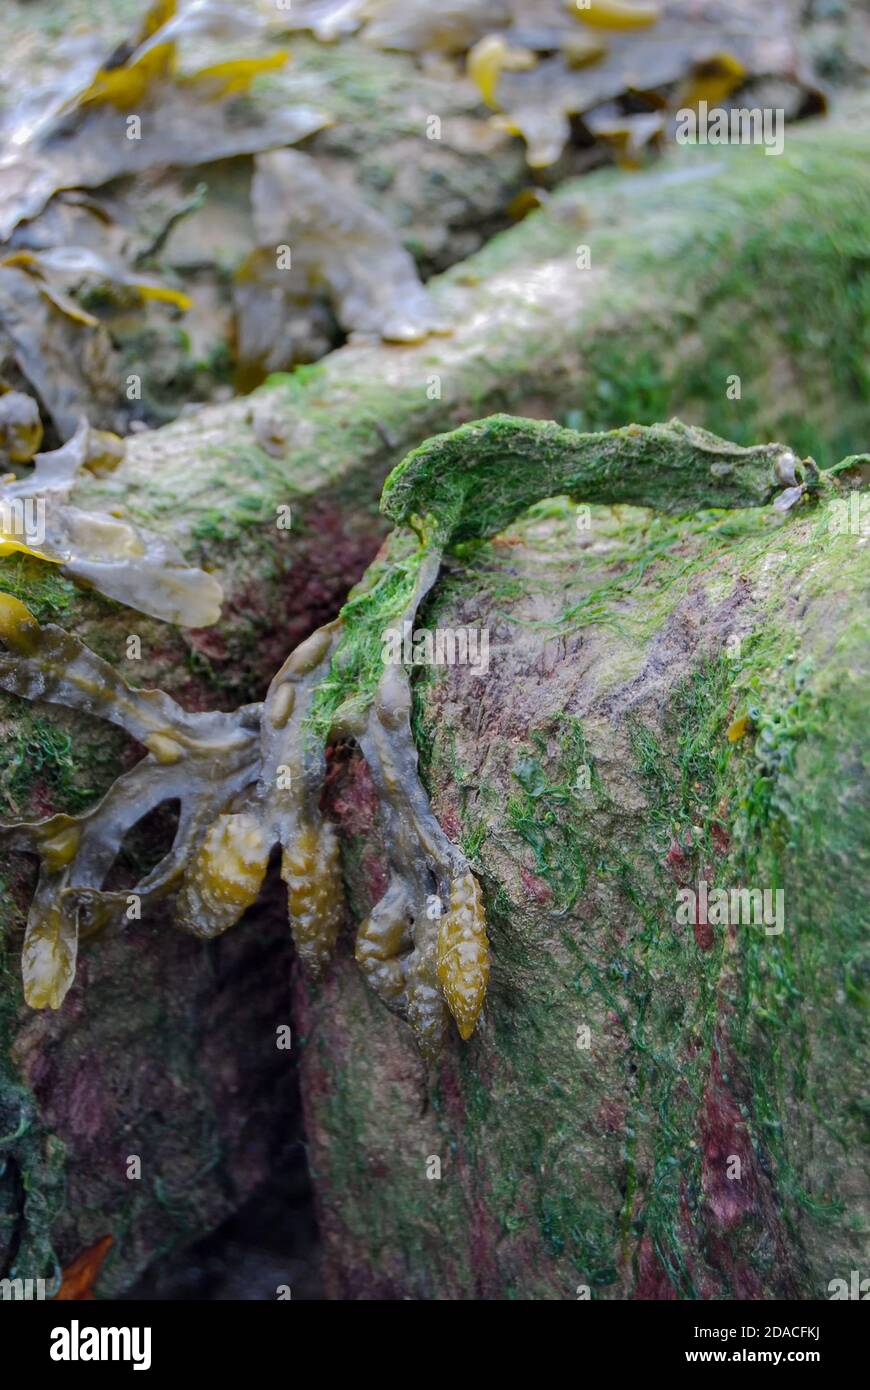 Spiral Wrack (Fucus spiralis) seaweed exposed at low tide Stock Photo